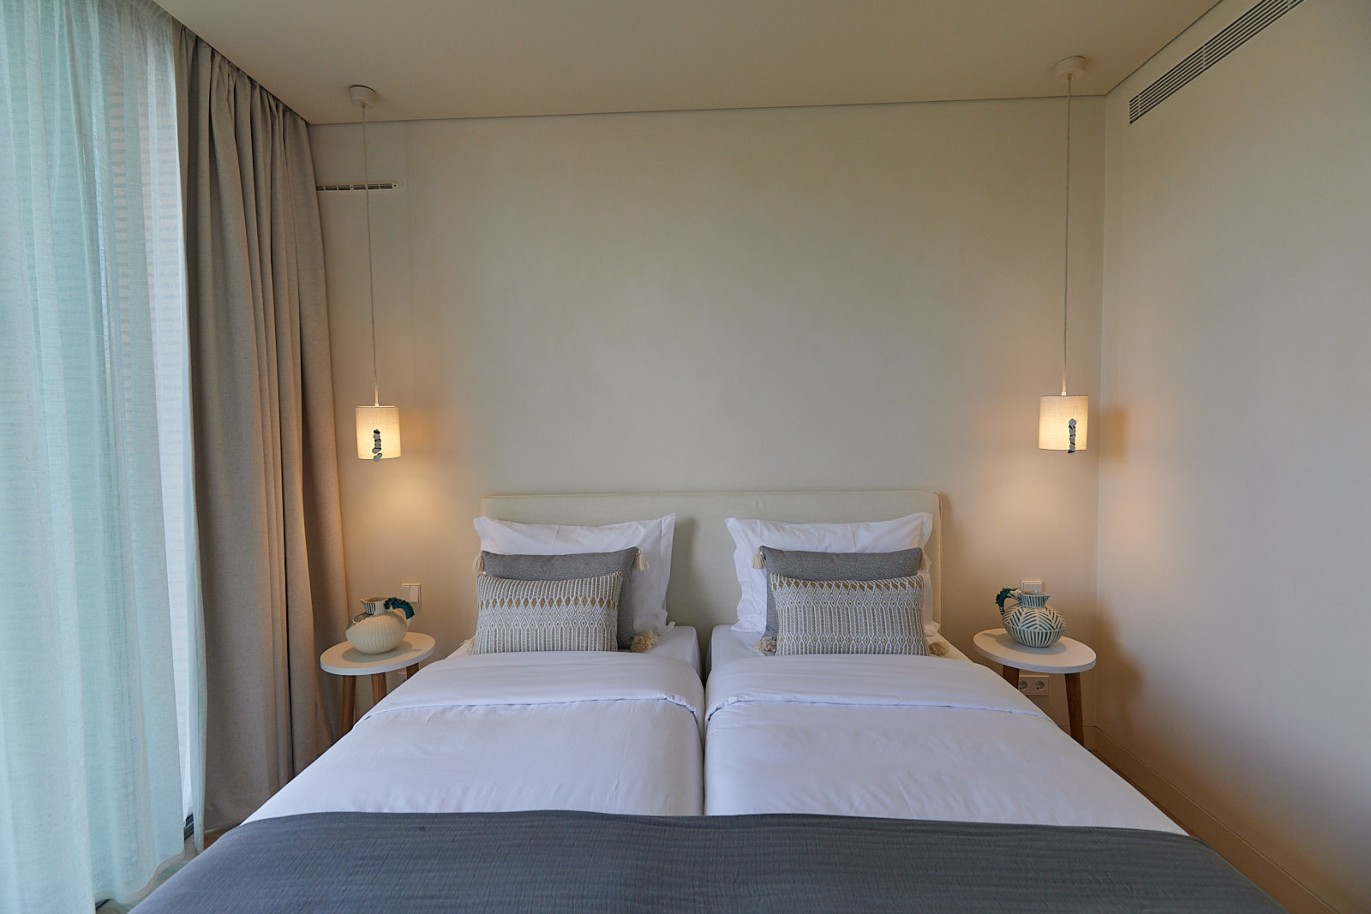 2 bedroom apartment in resort, for sale in Porches, Algarve_230491